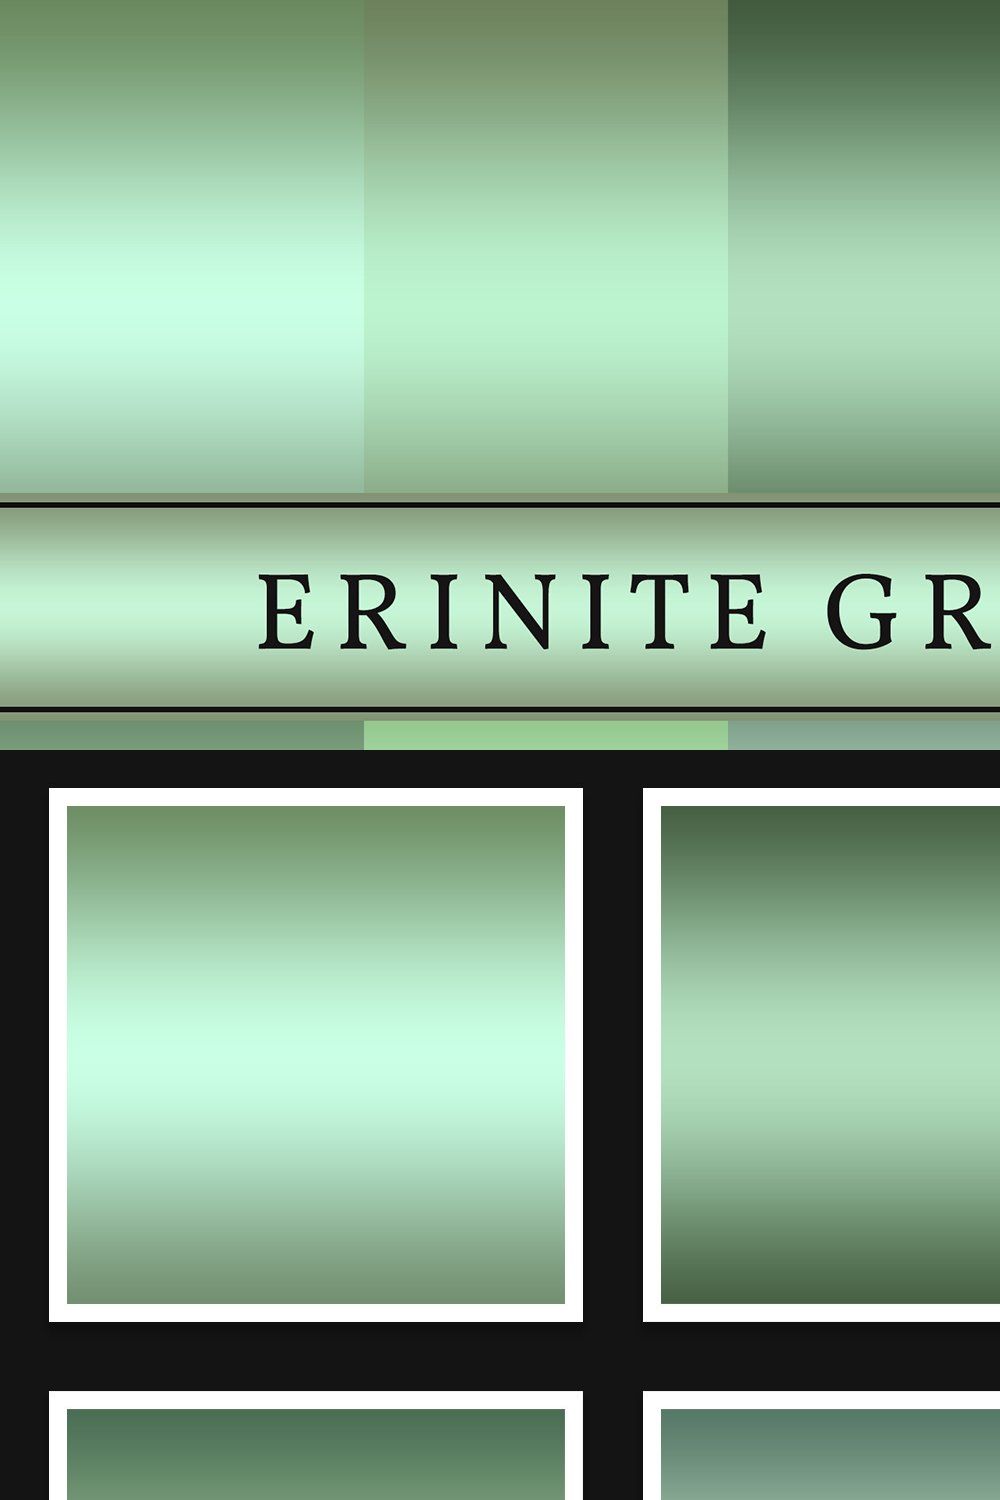 Erinite Gradients pinterest preview image.